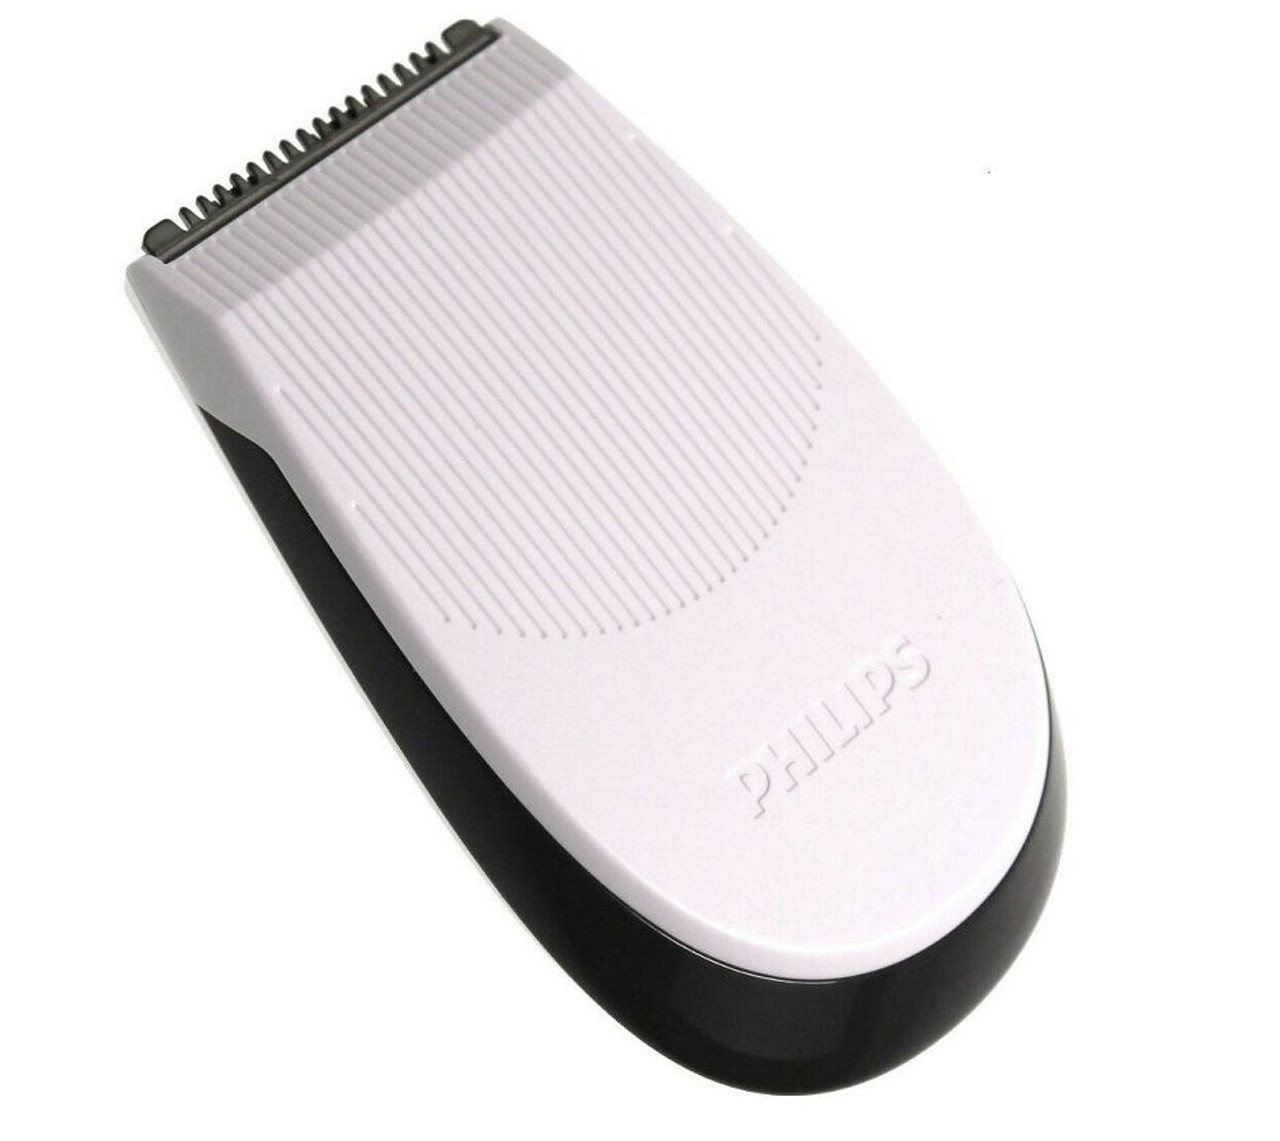 Philips Norelco Sideburn Trimmer Attachement White Fits Philips Norelco Models S7310, S7370, S7371, S7710, S7720, S7730, S7740, S7940